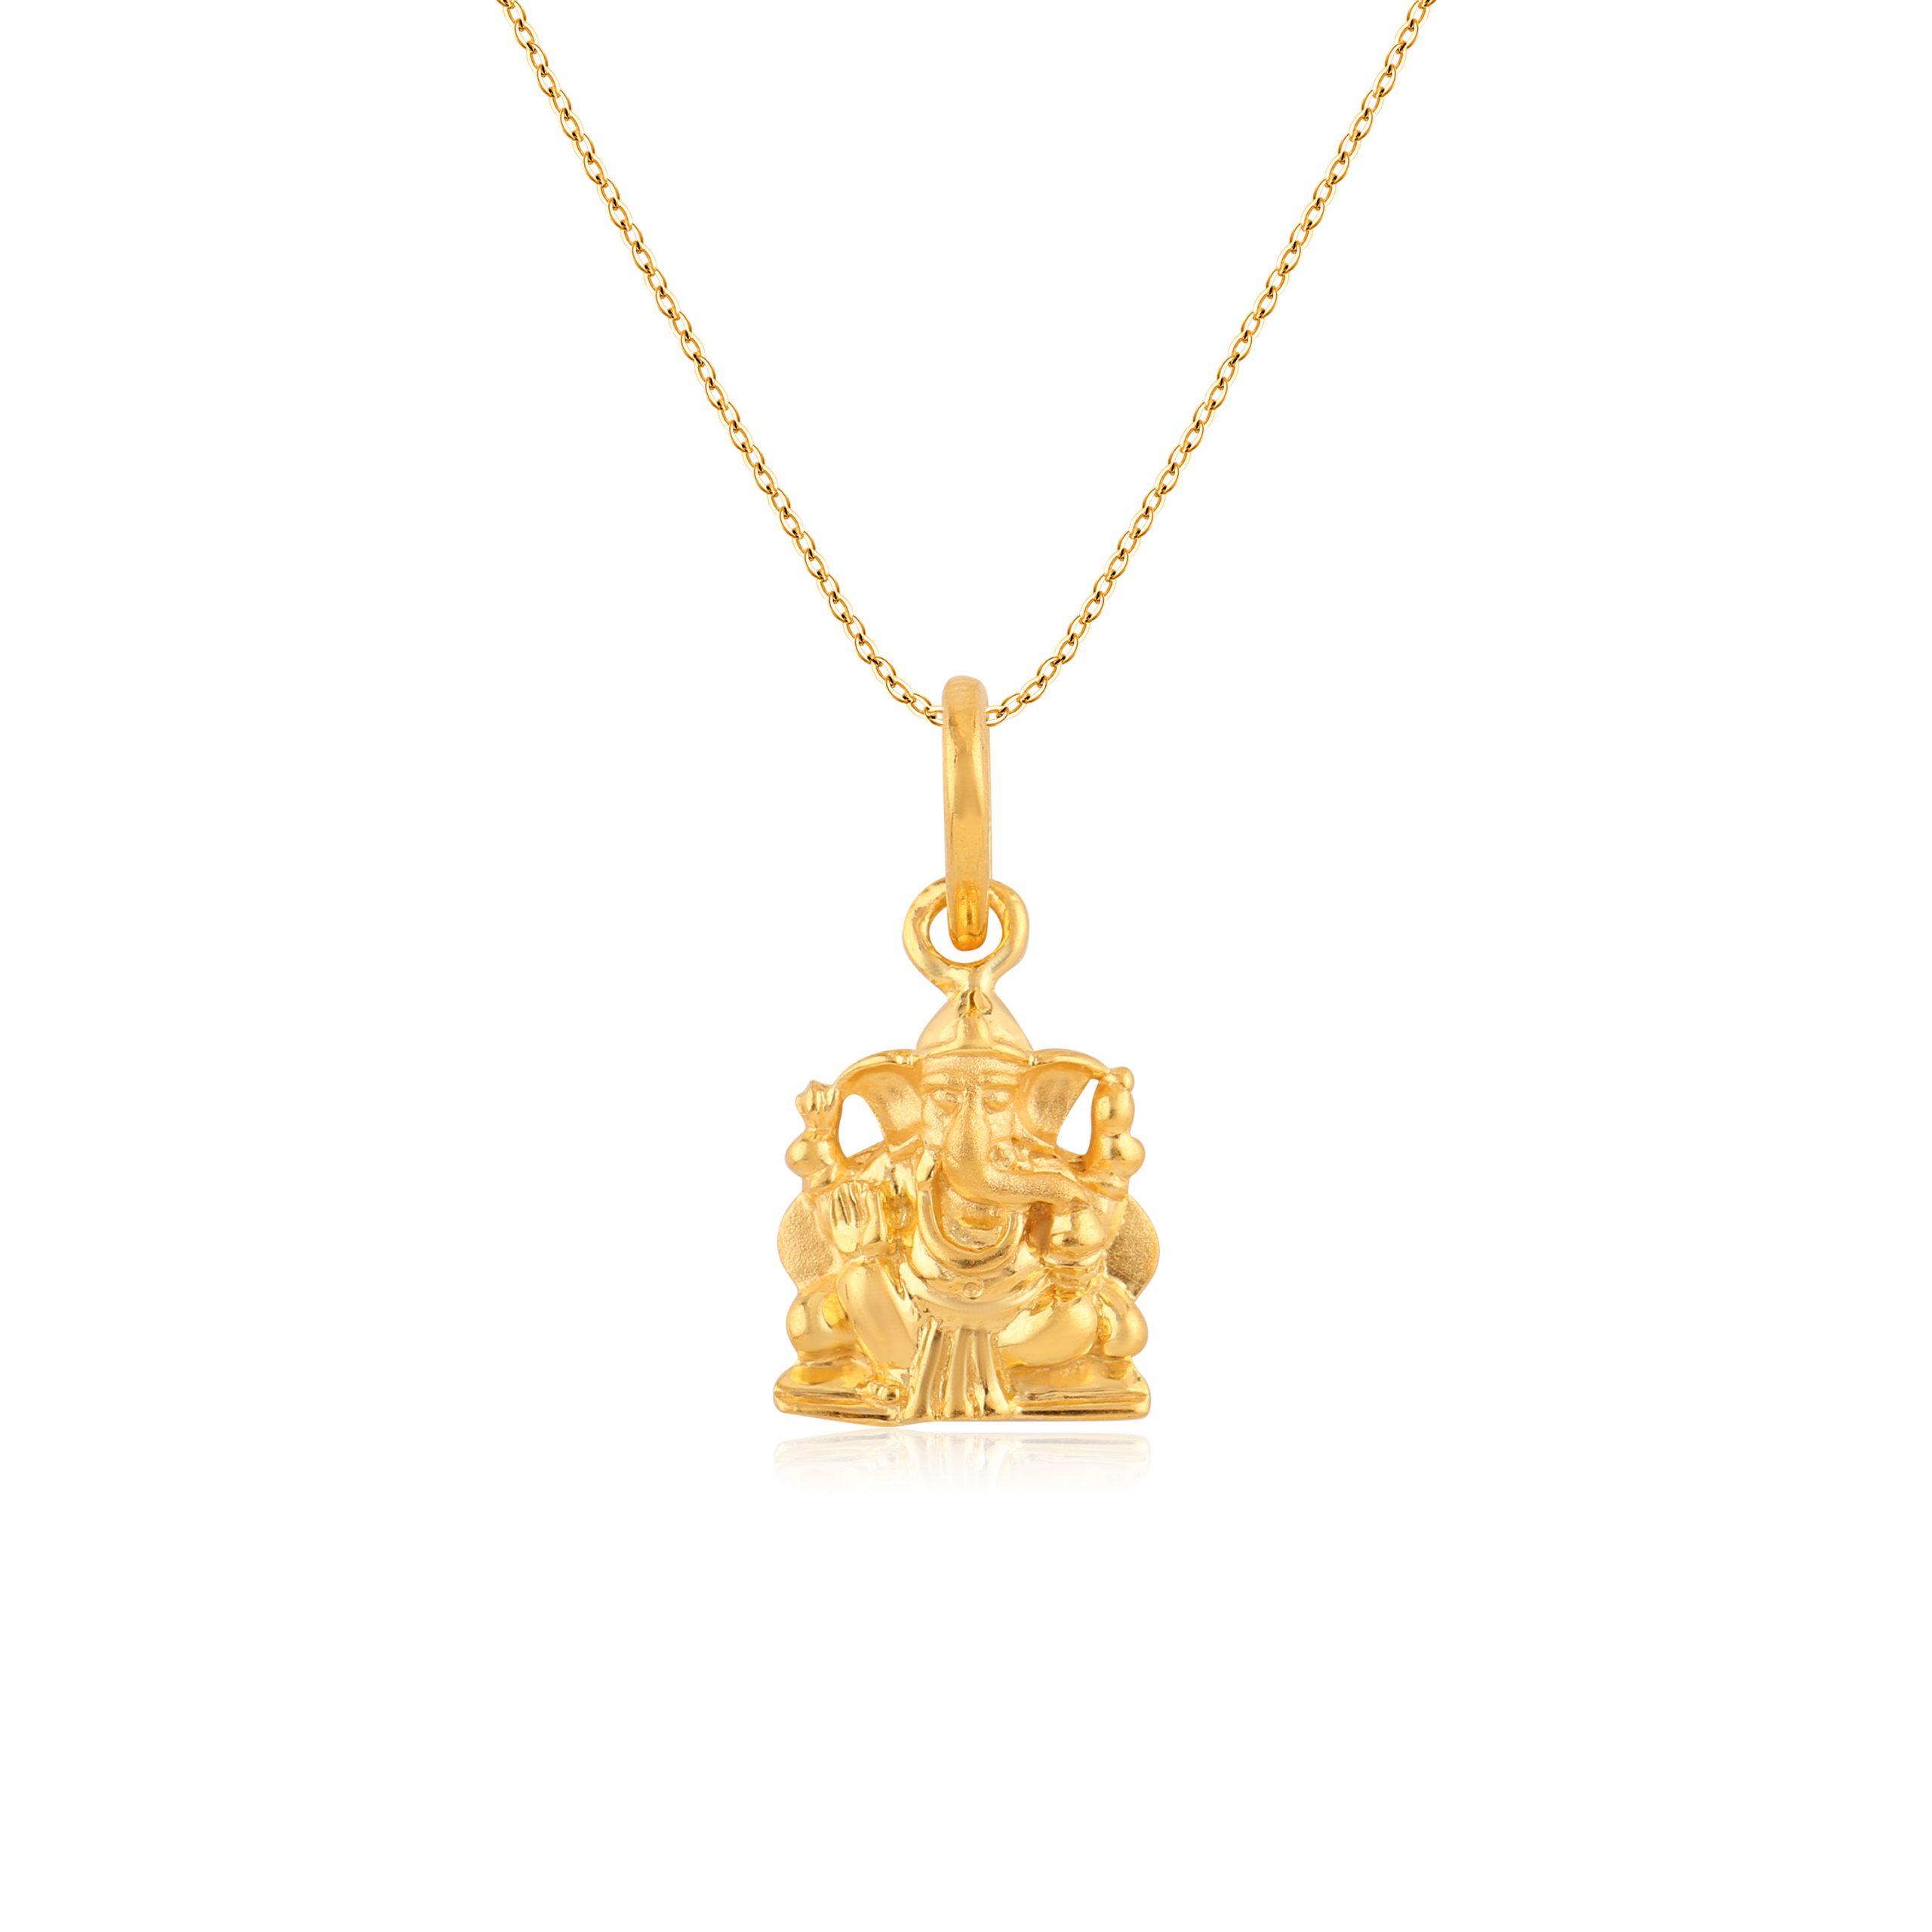 Auspicious 22 Karat Lord Ganesha Gold Pendant